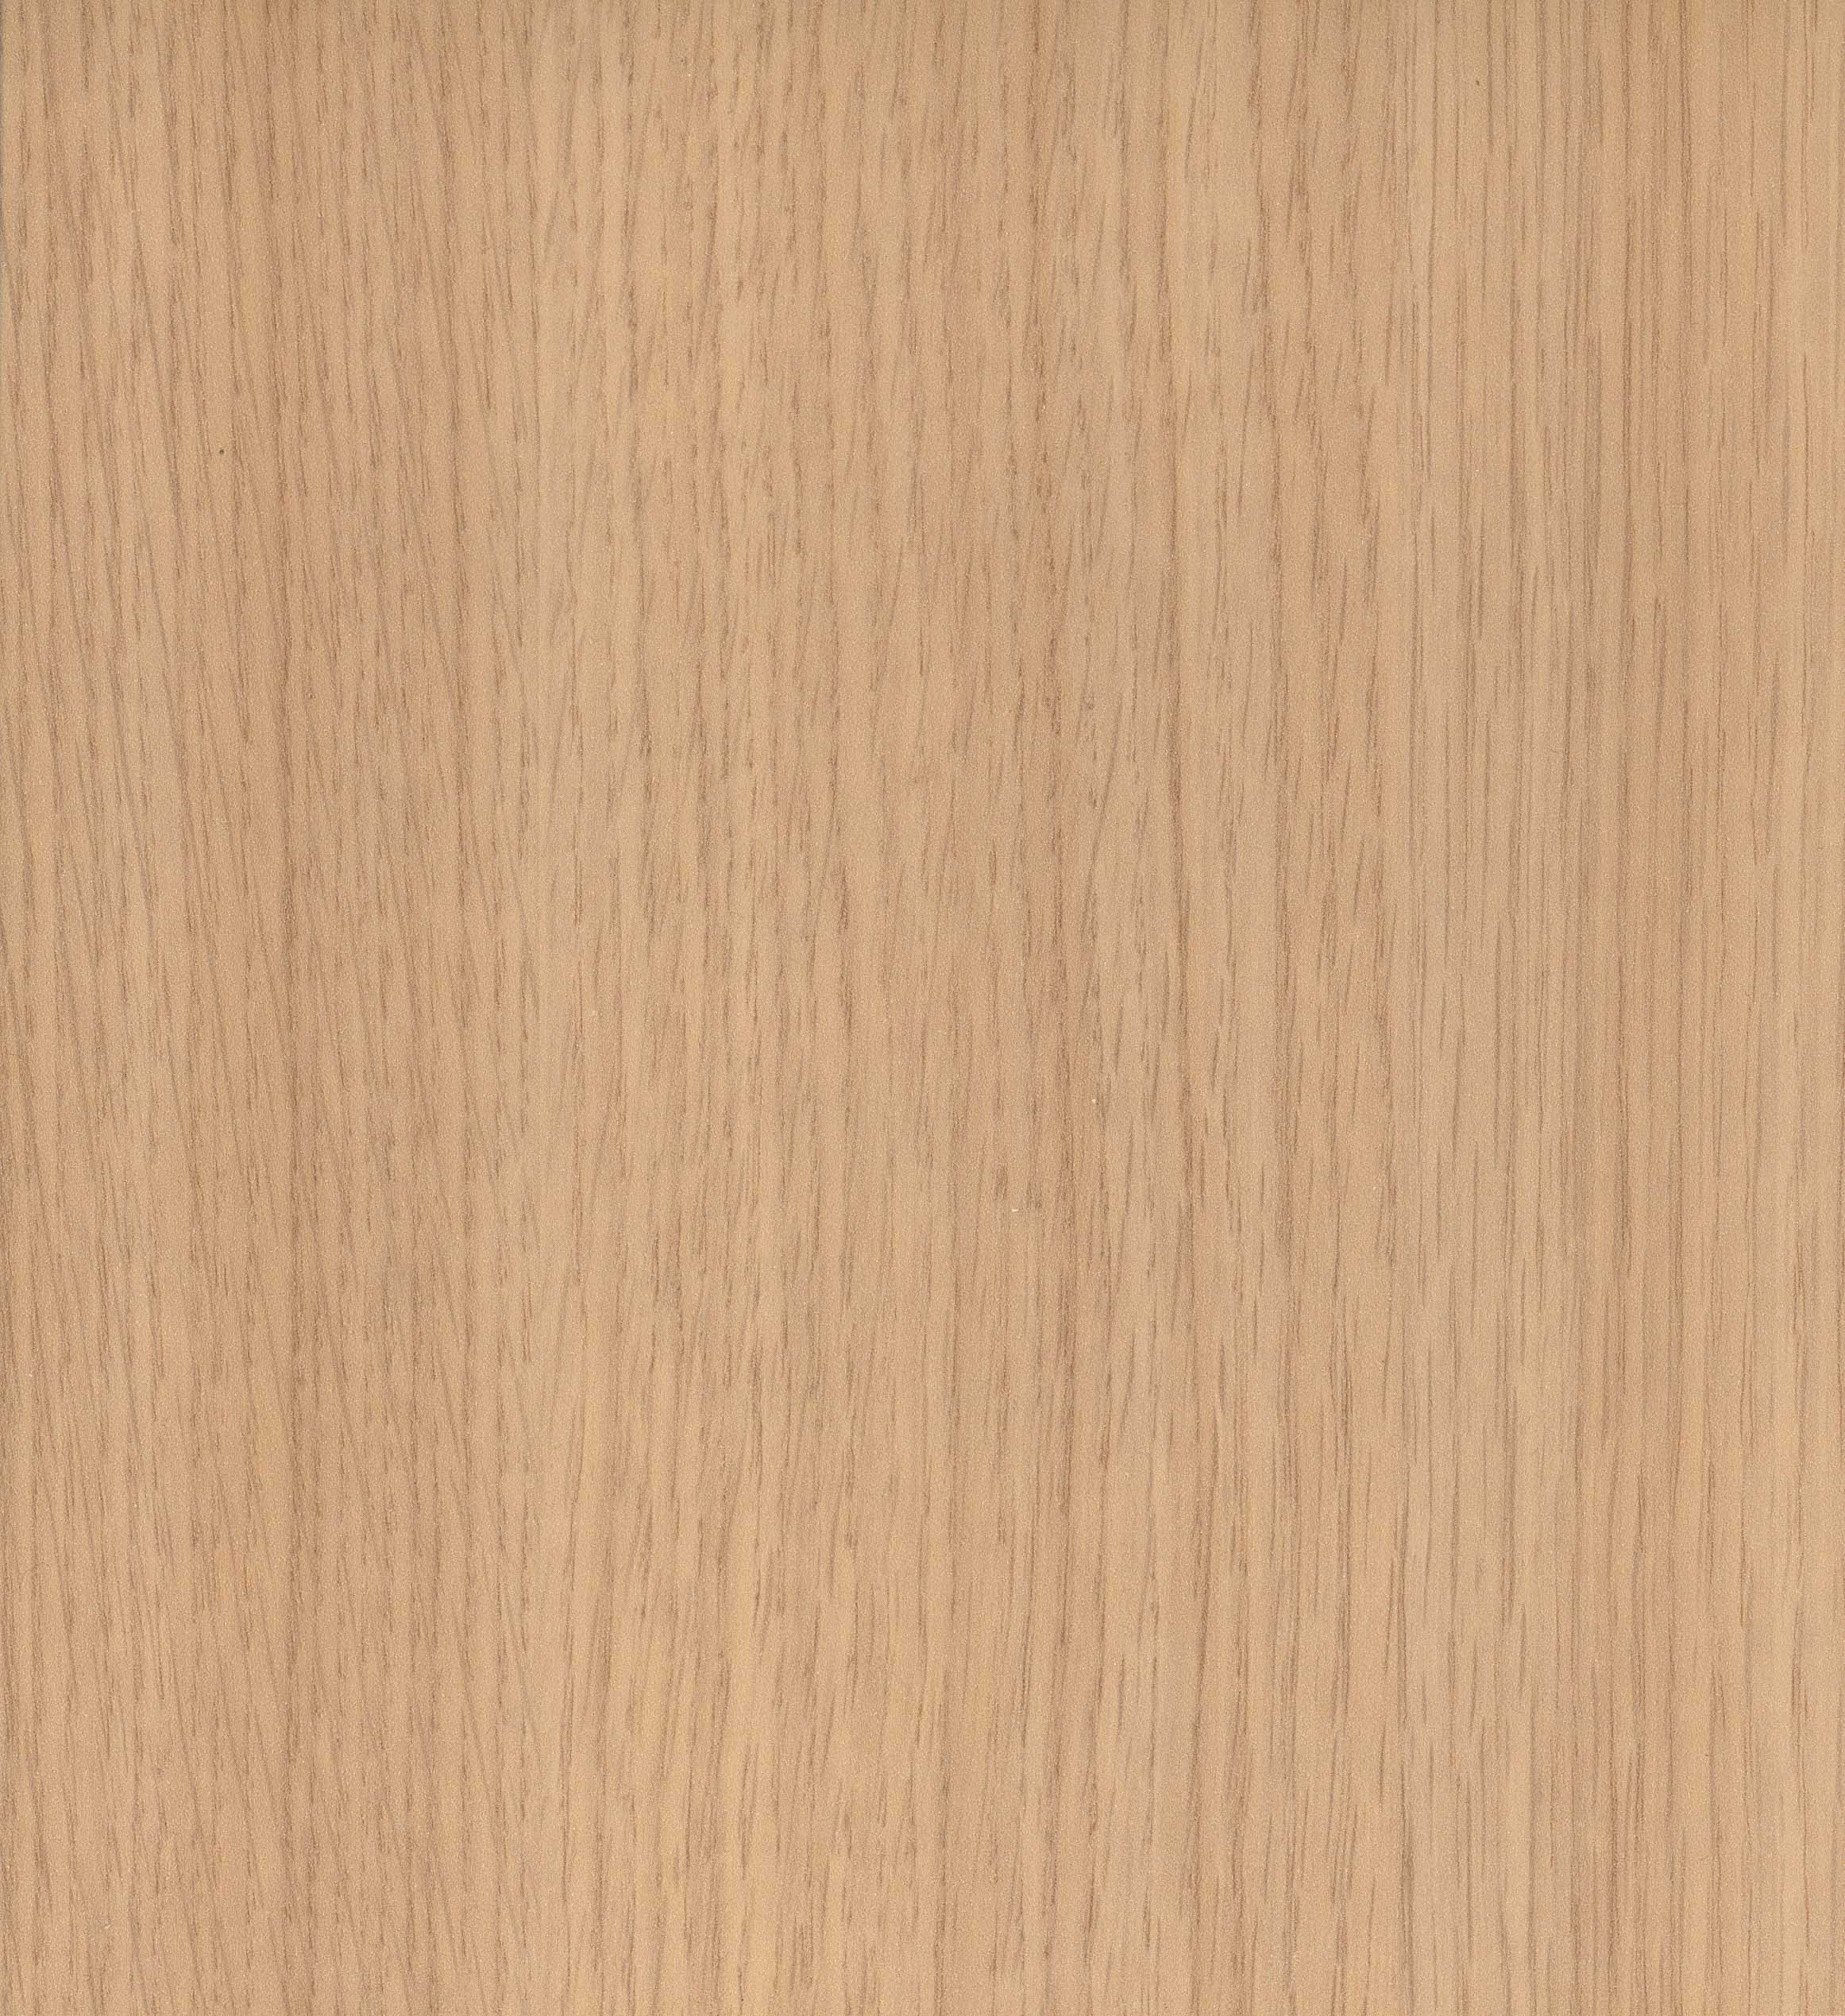 Decor SwissSPAN Holz (PG4) - D 2240 VL Eiche Niagara  19 mm - 2800 x 2070 mm